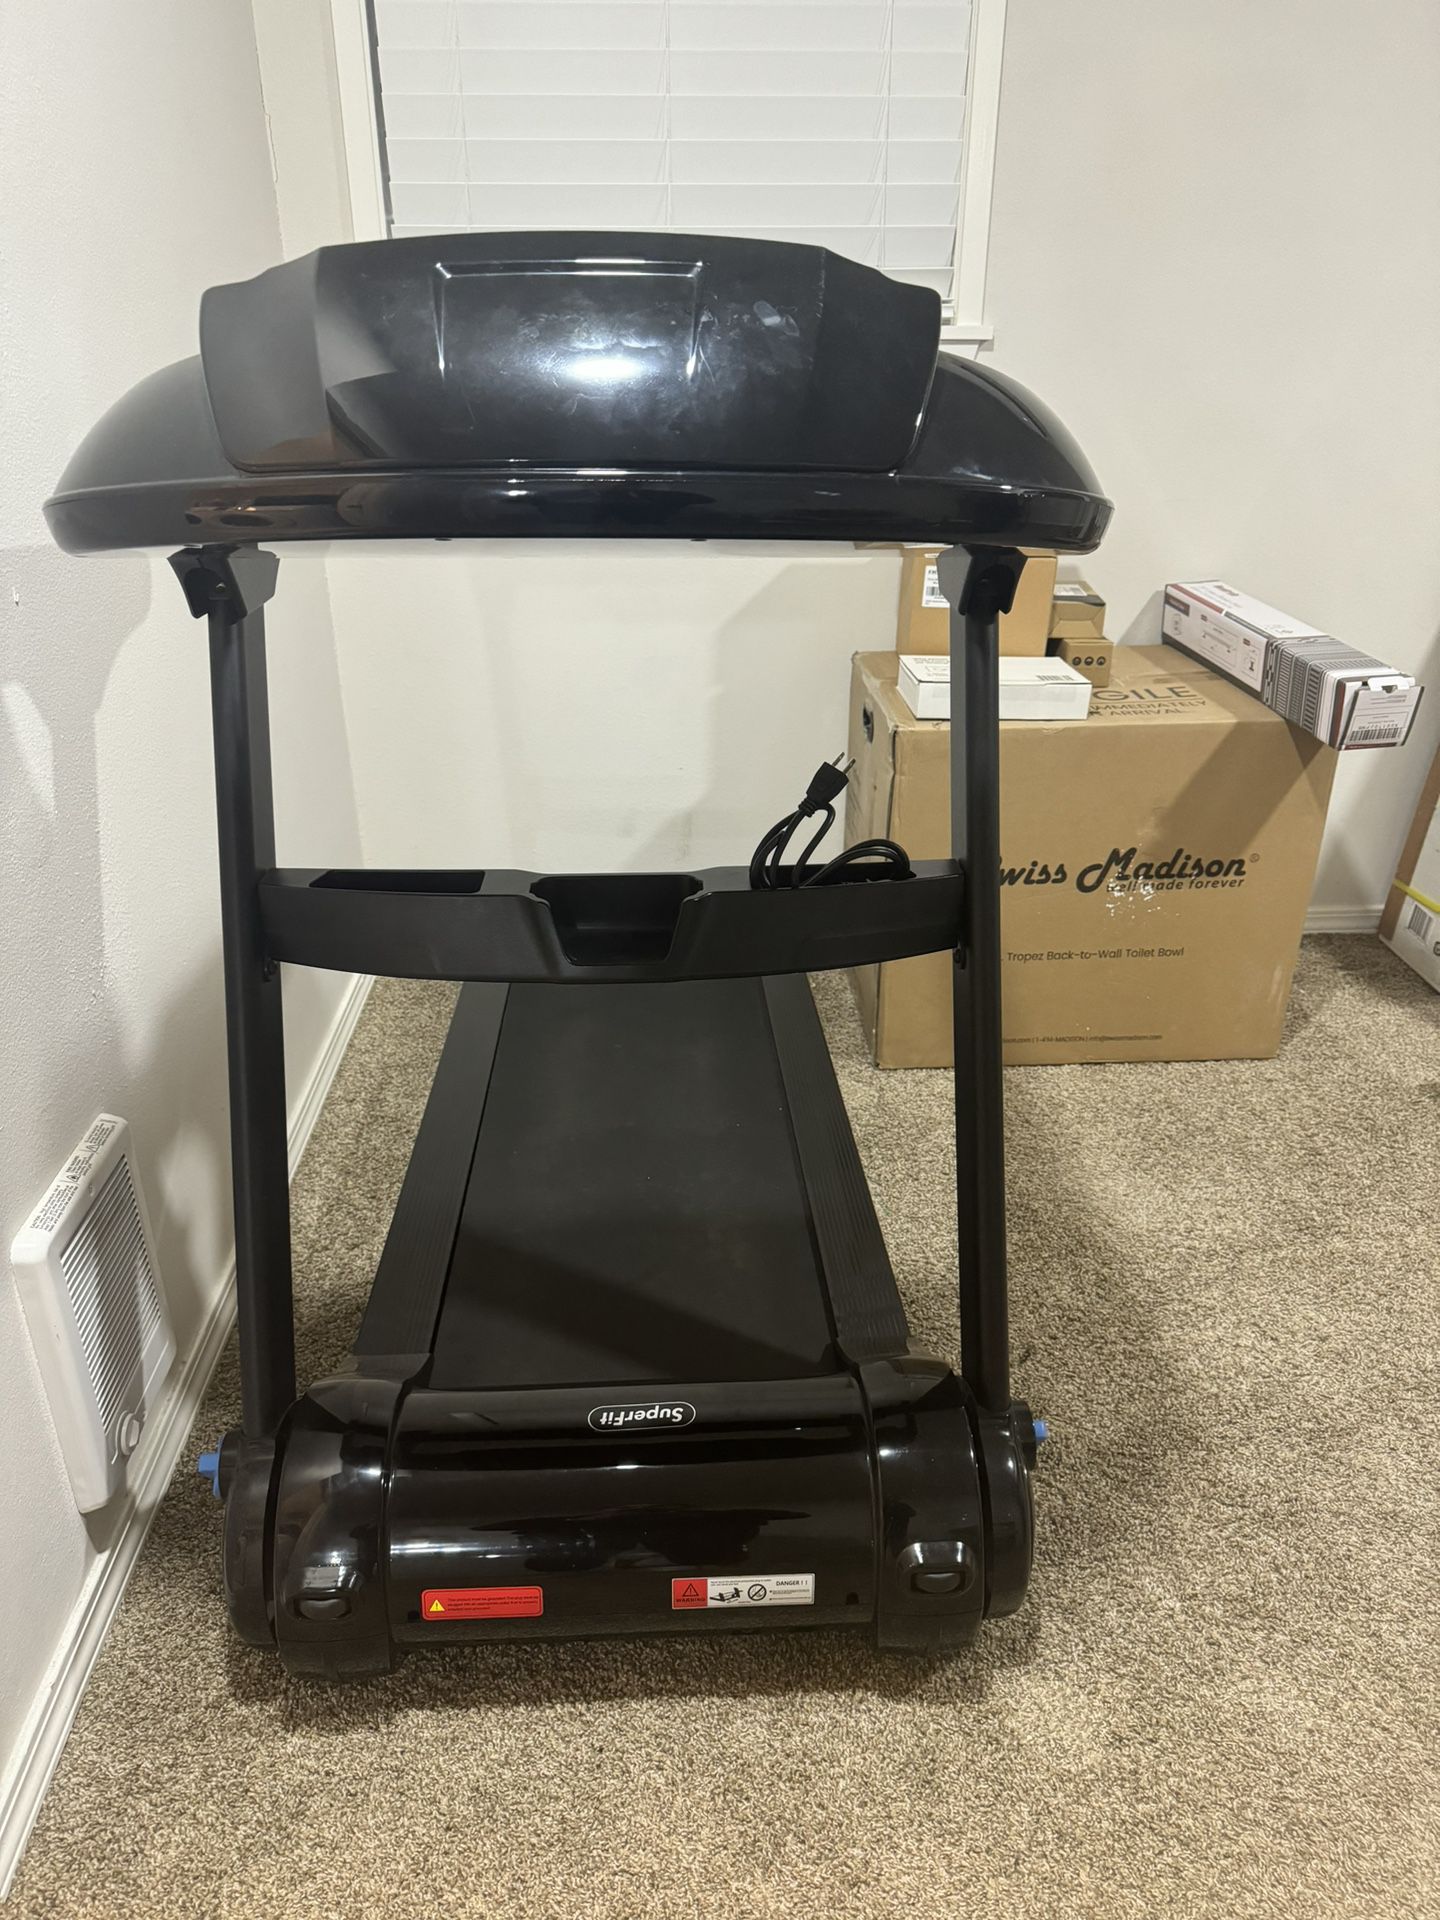 Treadmill - Foldable 